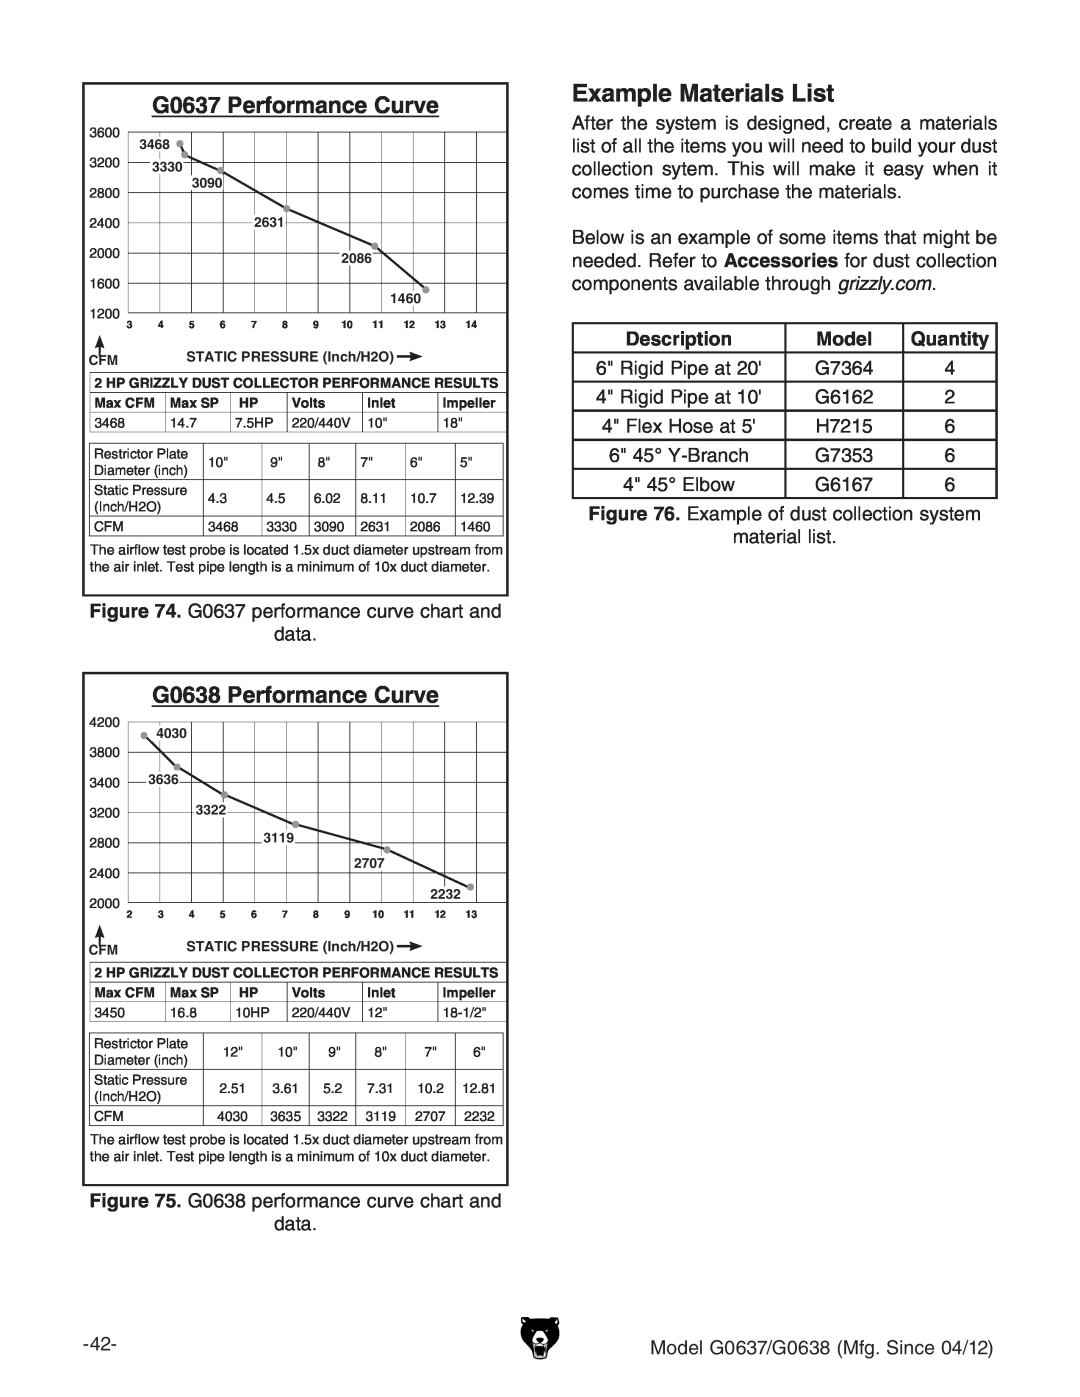 Grizzly Example Materials List, G0637 Performance Curve, G0638 Performance Curve, Description, Model, Quantity 